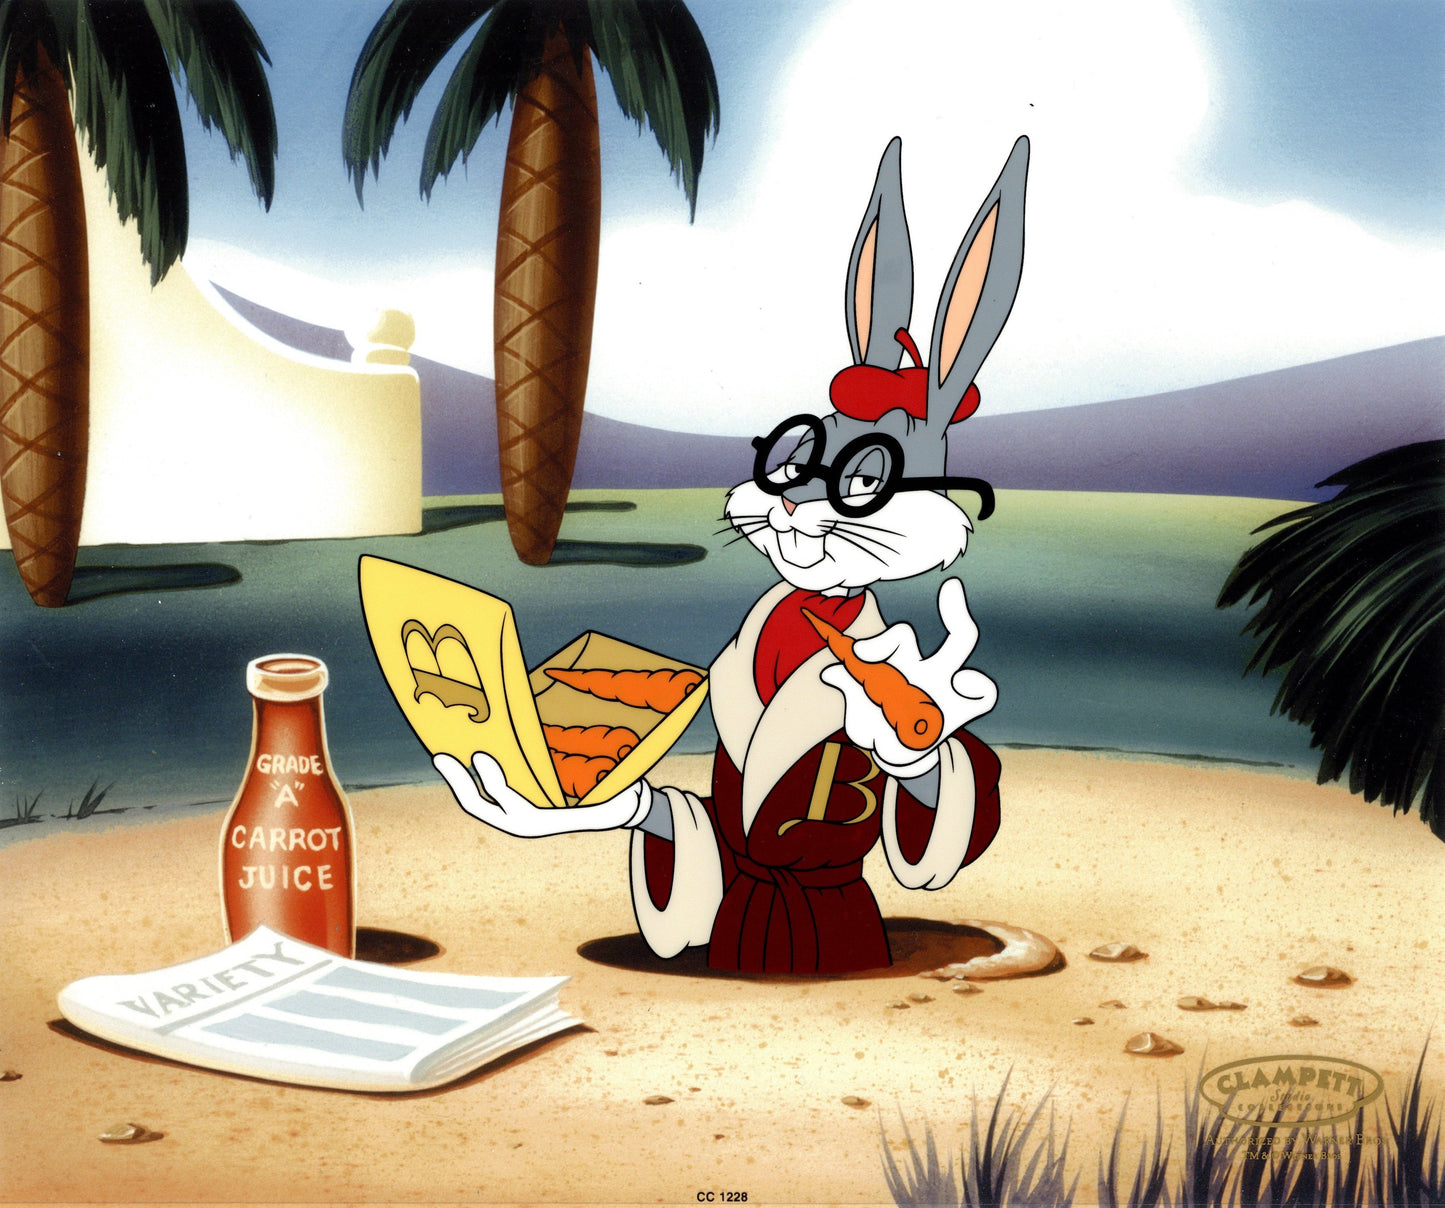 Hollywood Bugs Looney Tunes Warner Bros Ltd Ed Animation Cel of 20 Bugs Bunny AP